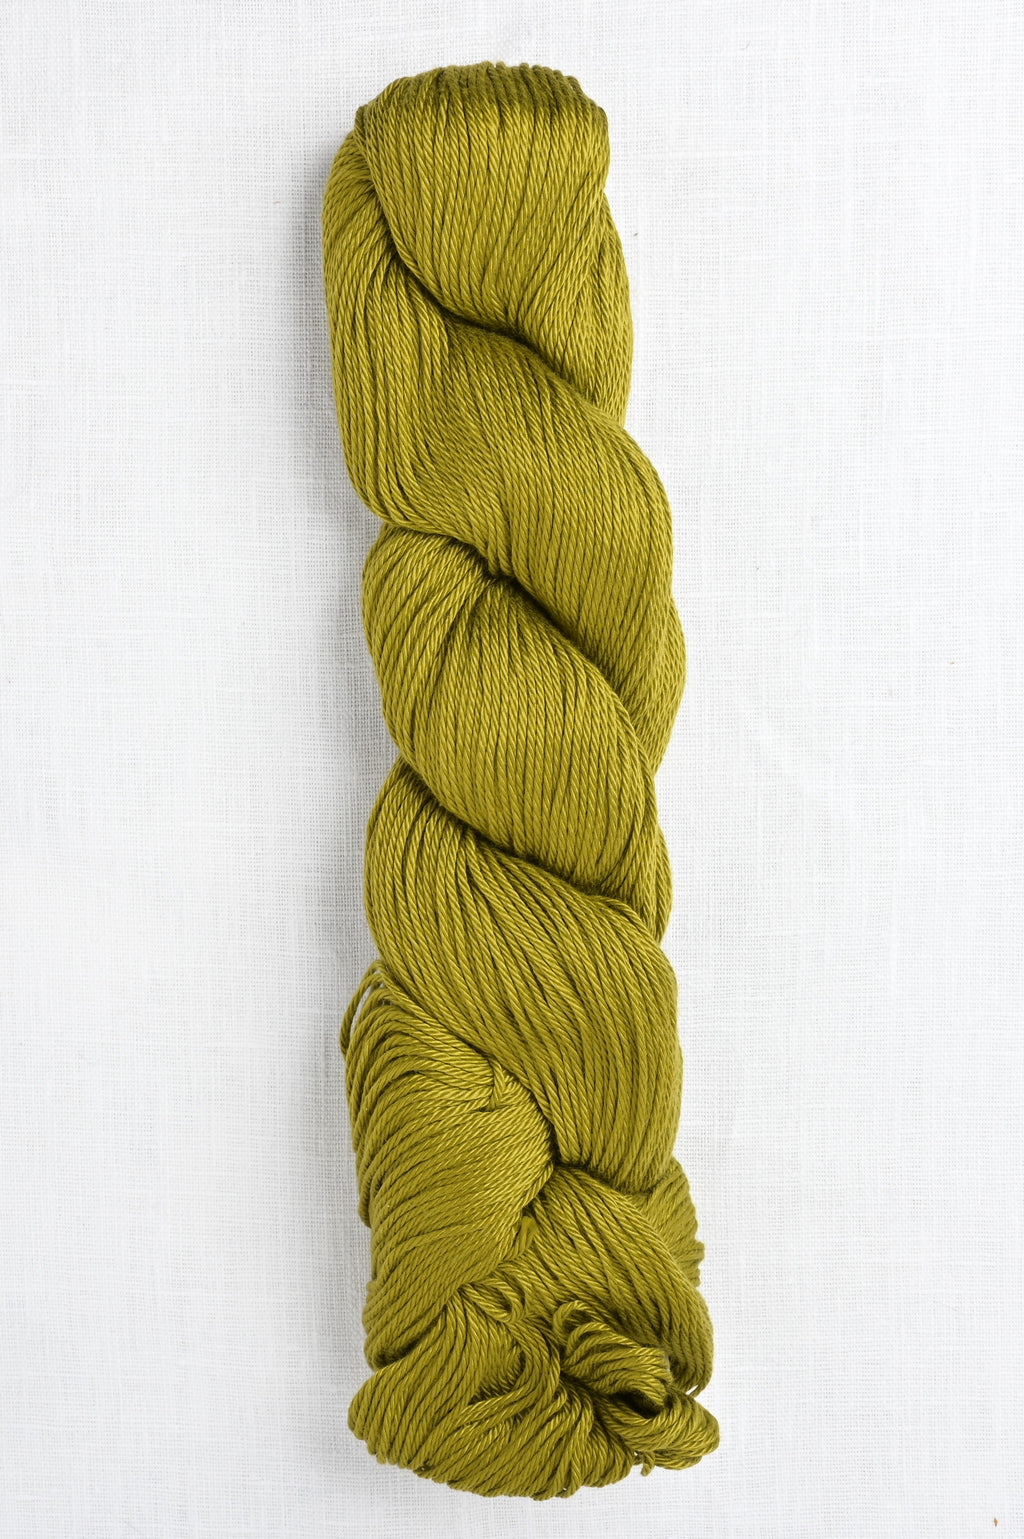 Cascade Yarns - Ultra Pima - Bright Olive 3745